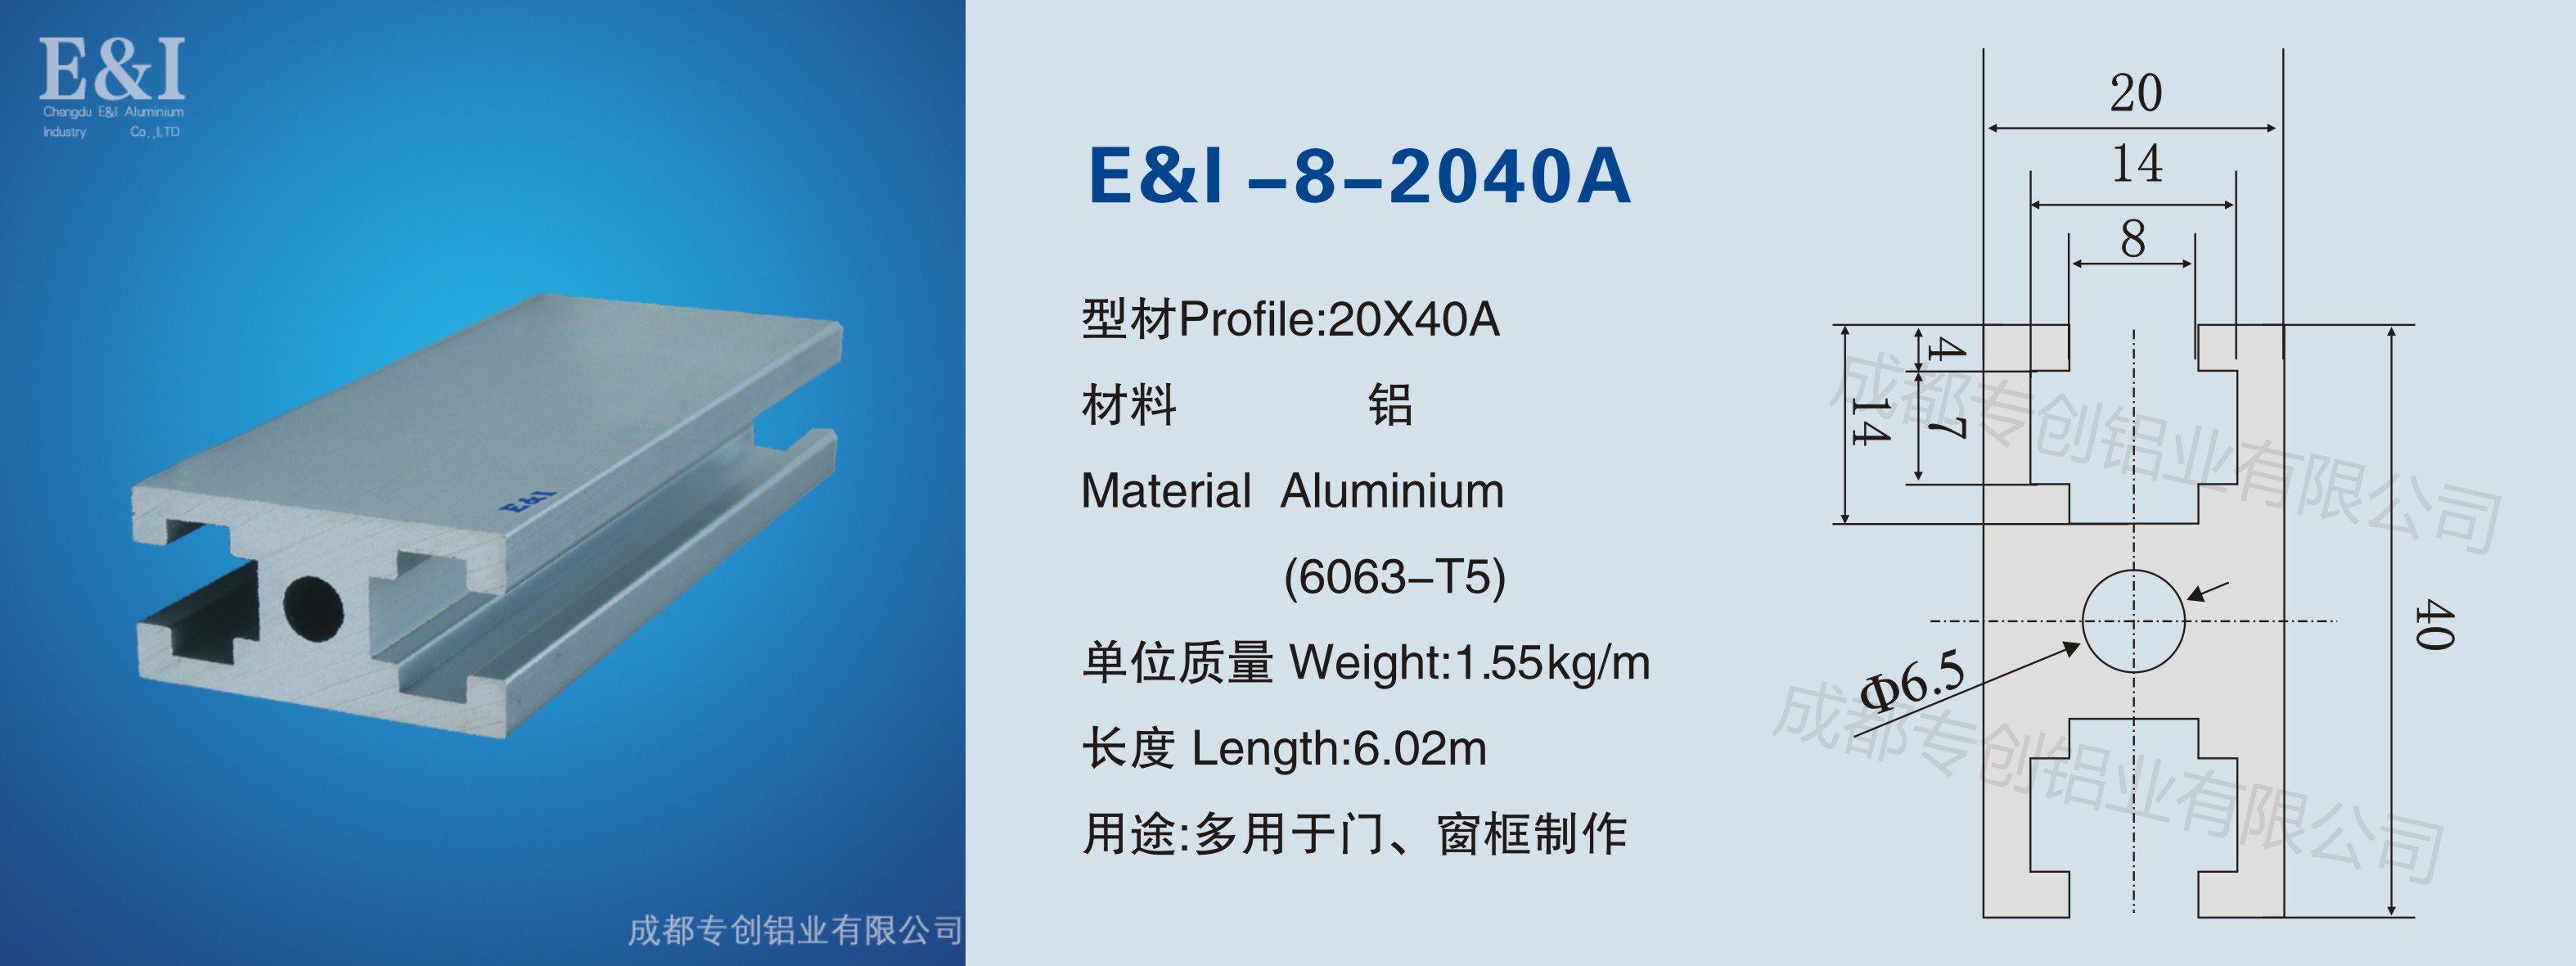 2040A工业铝型材